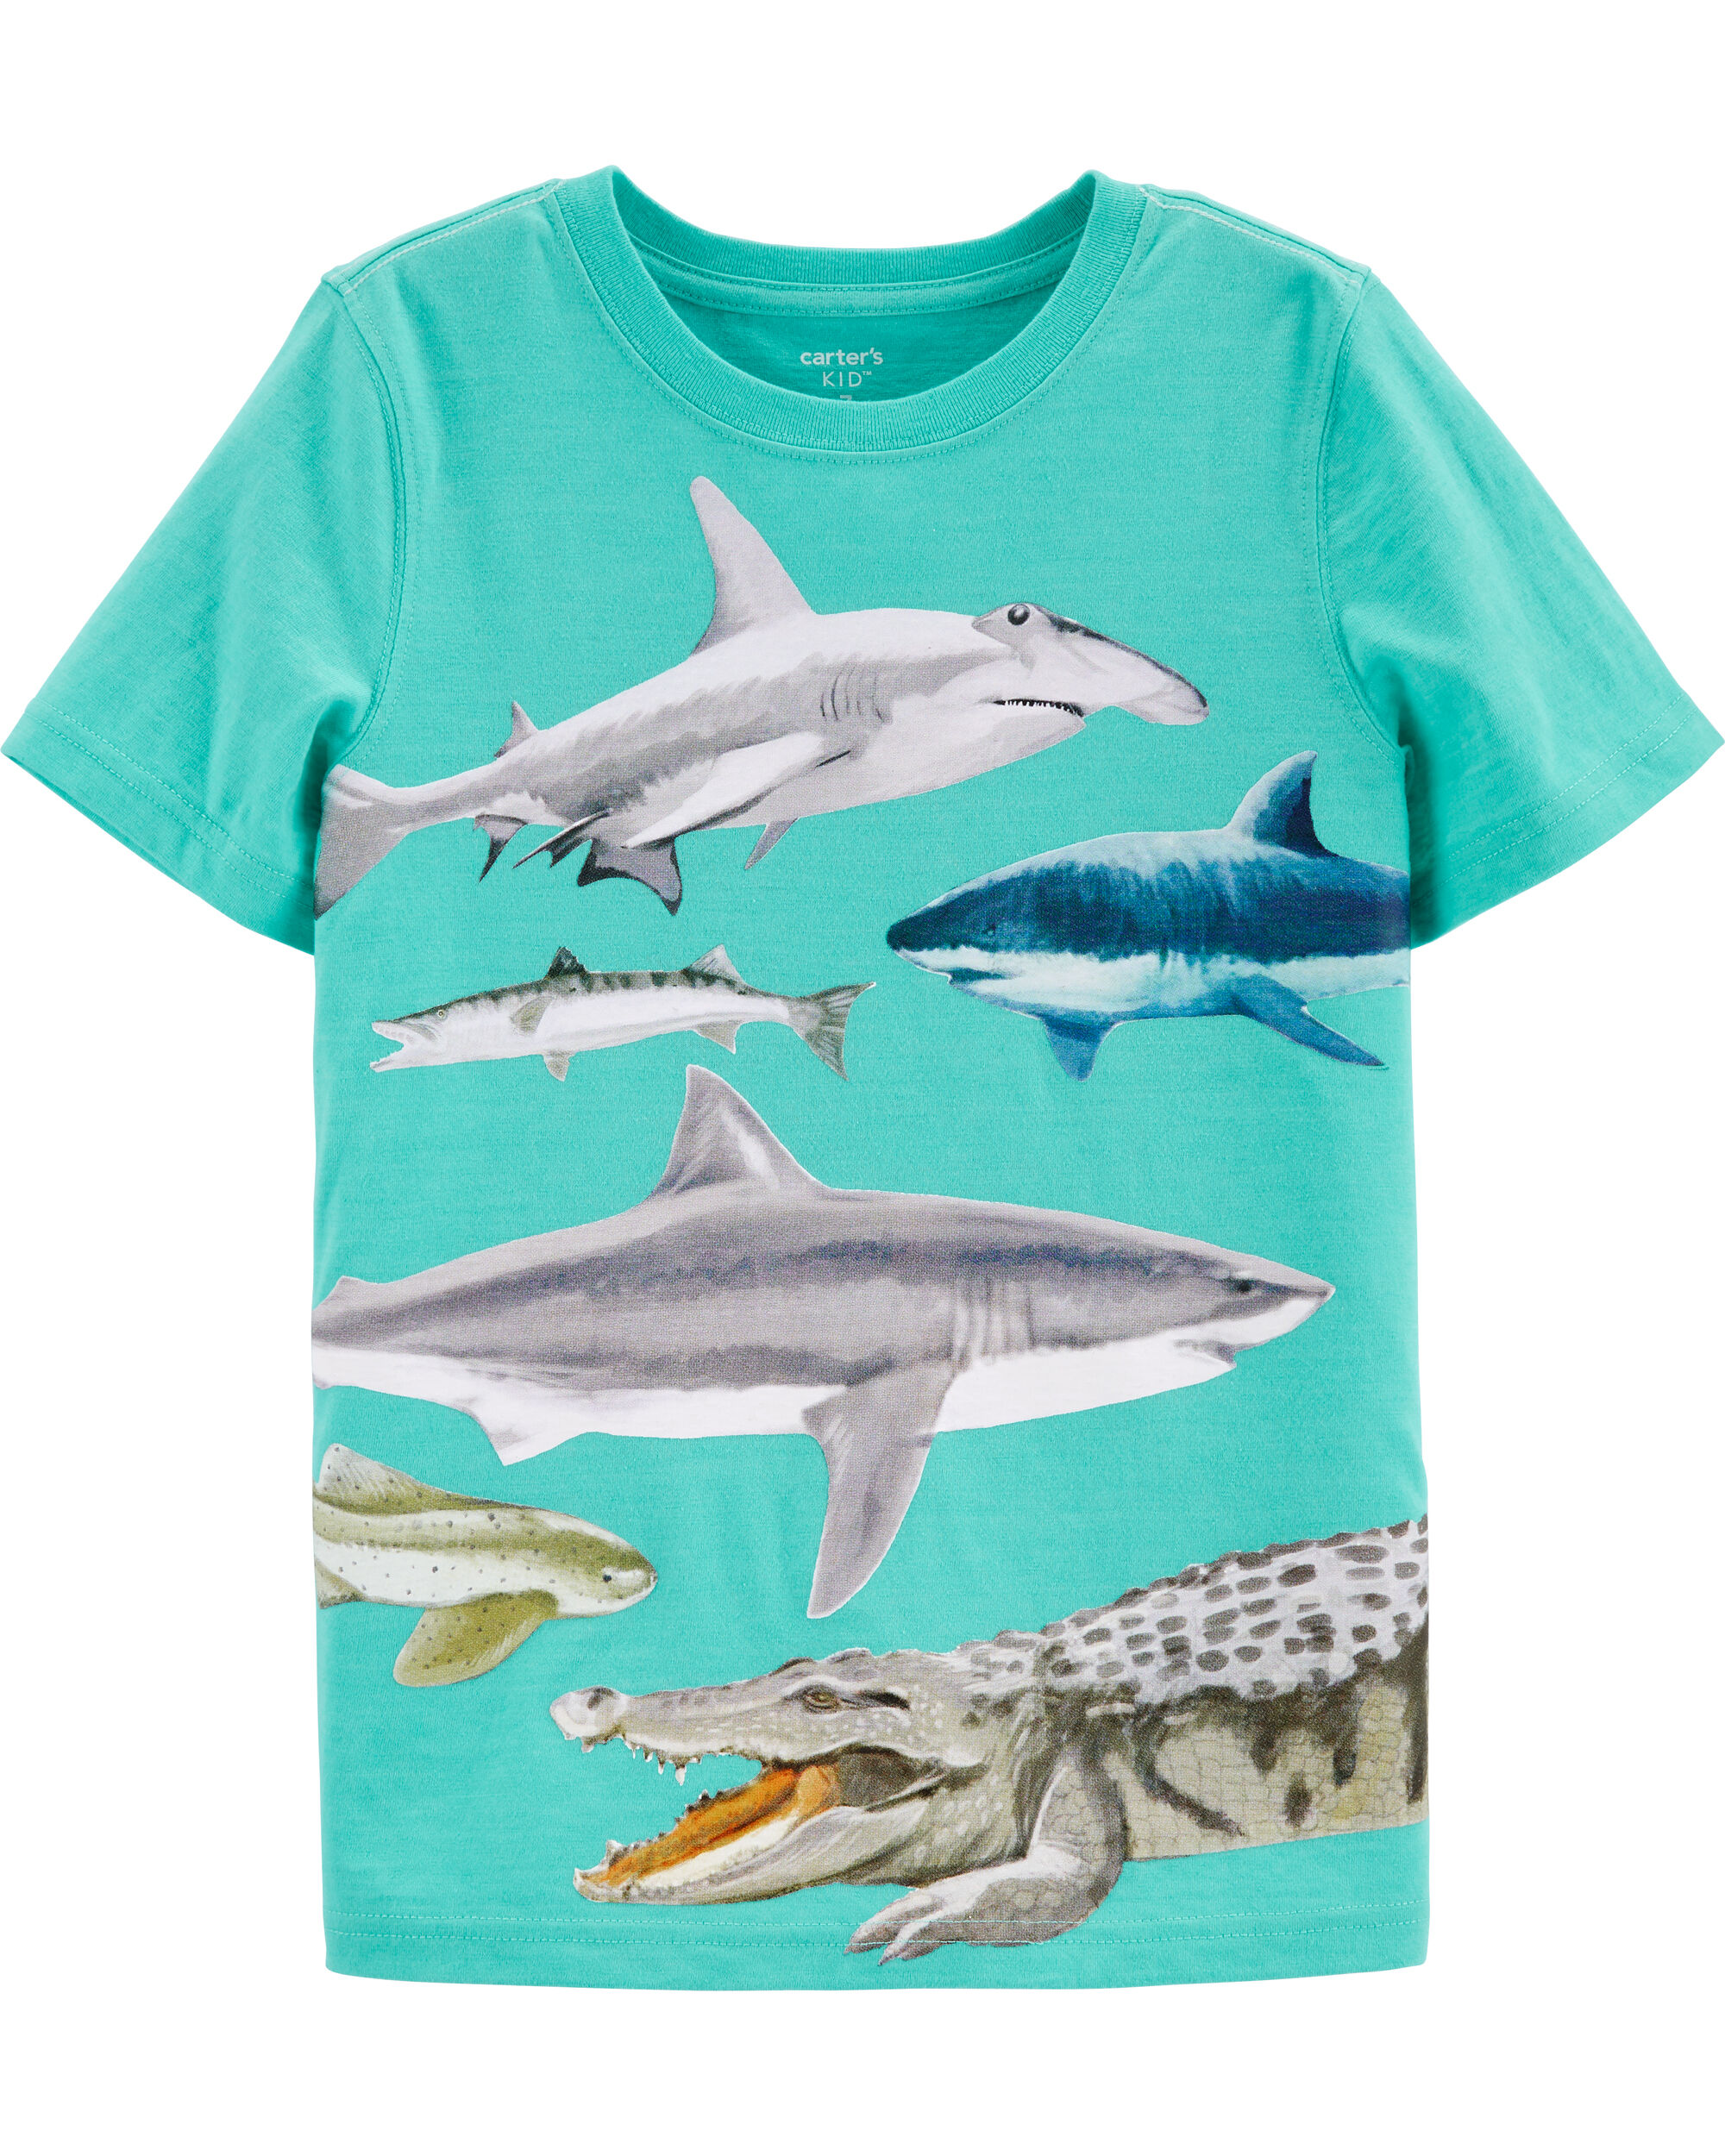 sharks toddler jersey